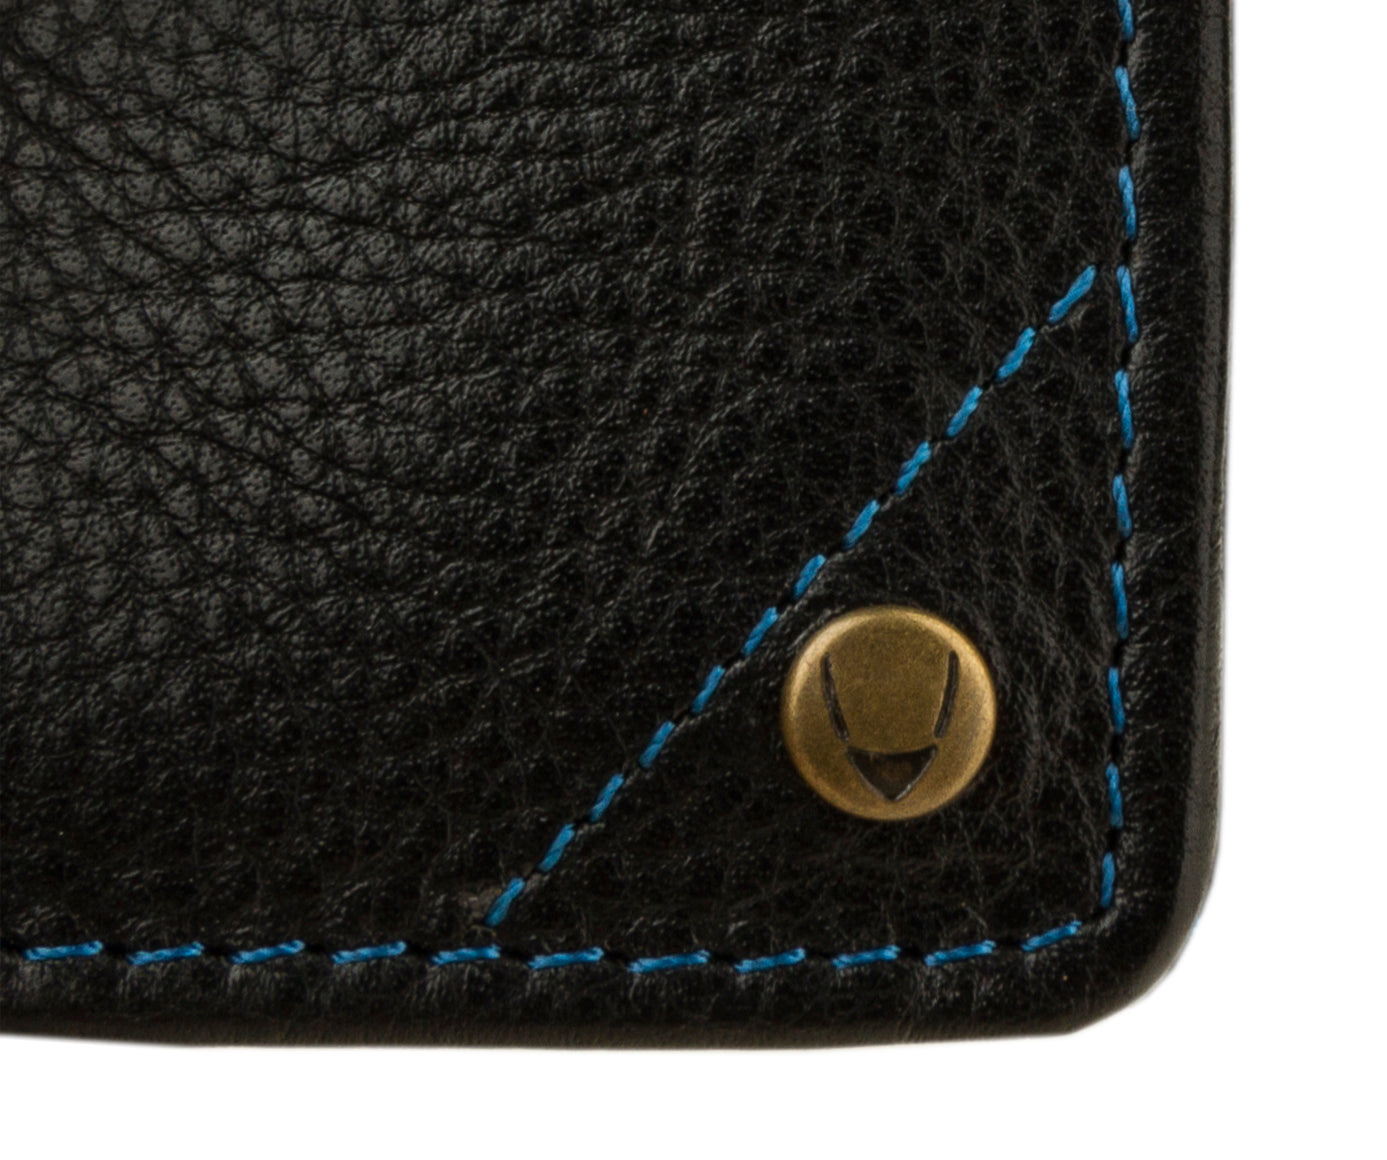 Best leather wallets for men